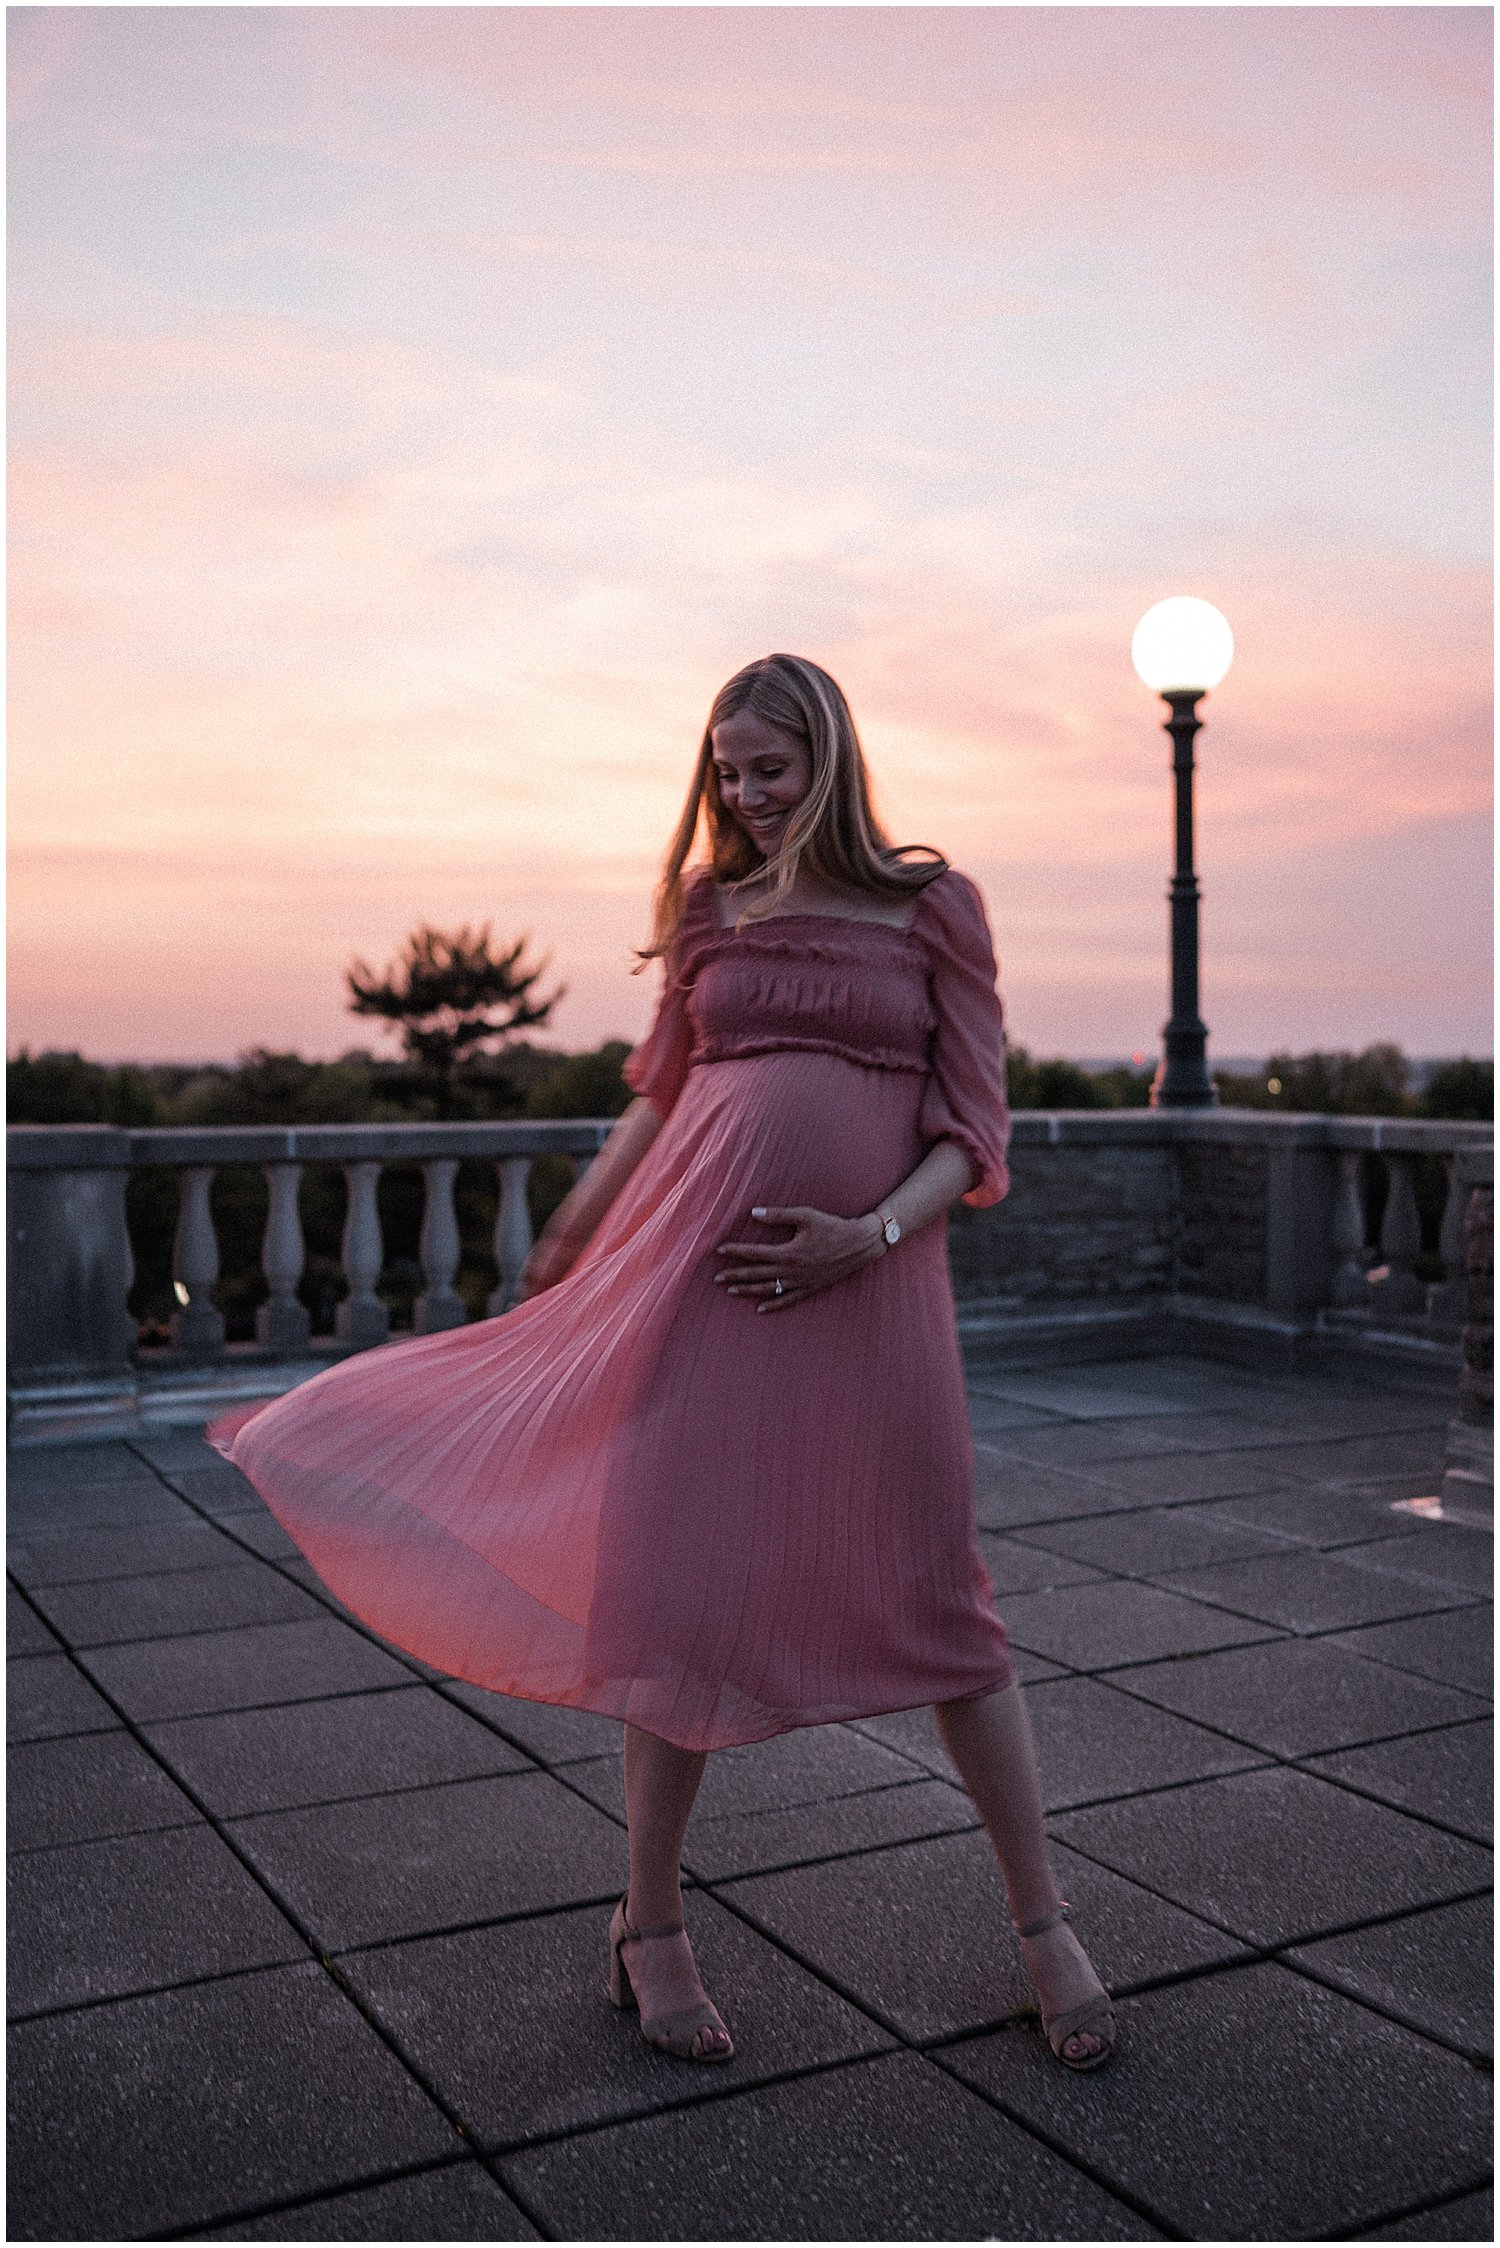 Ault Park Maternity Portraits | Cincinnati, Ohio